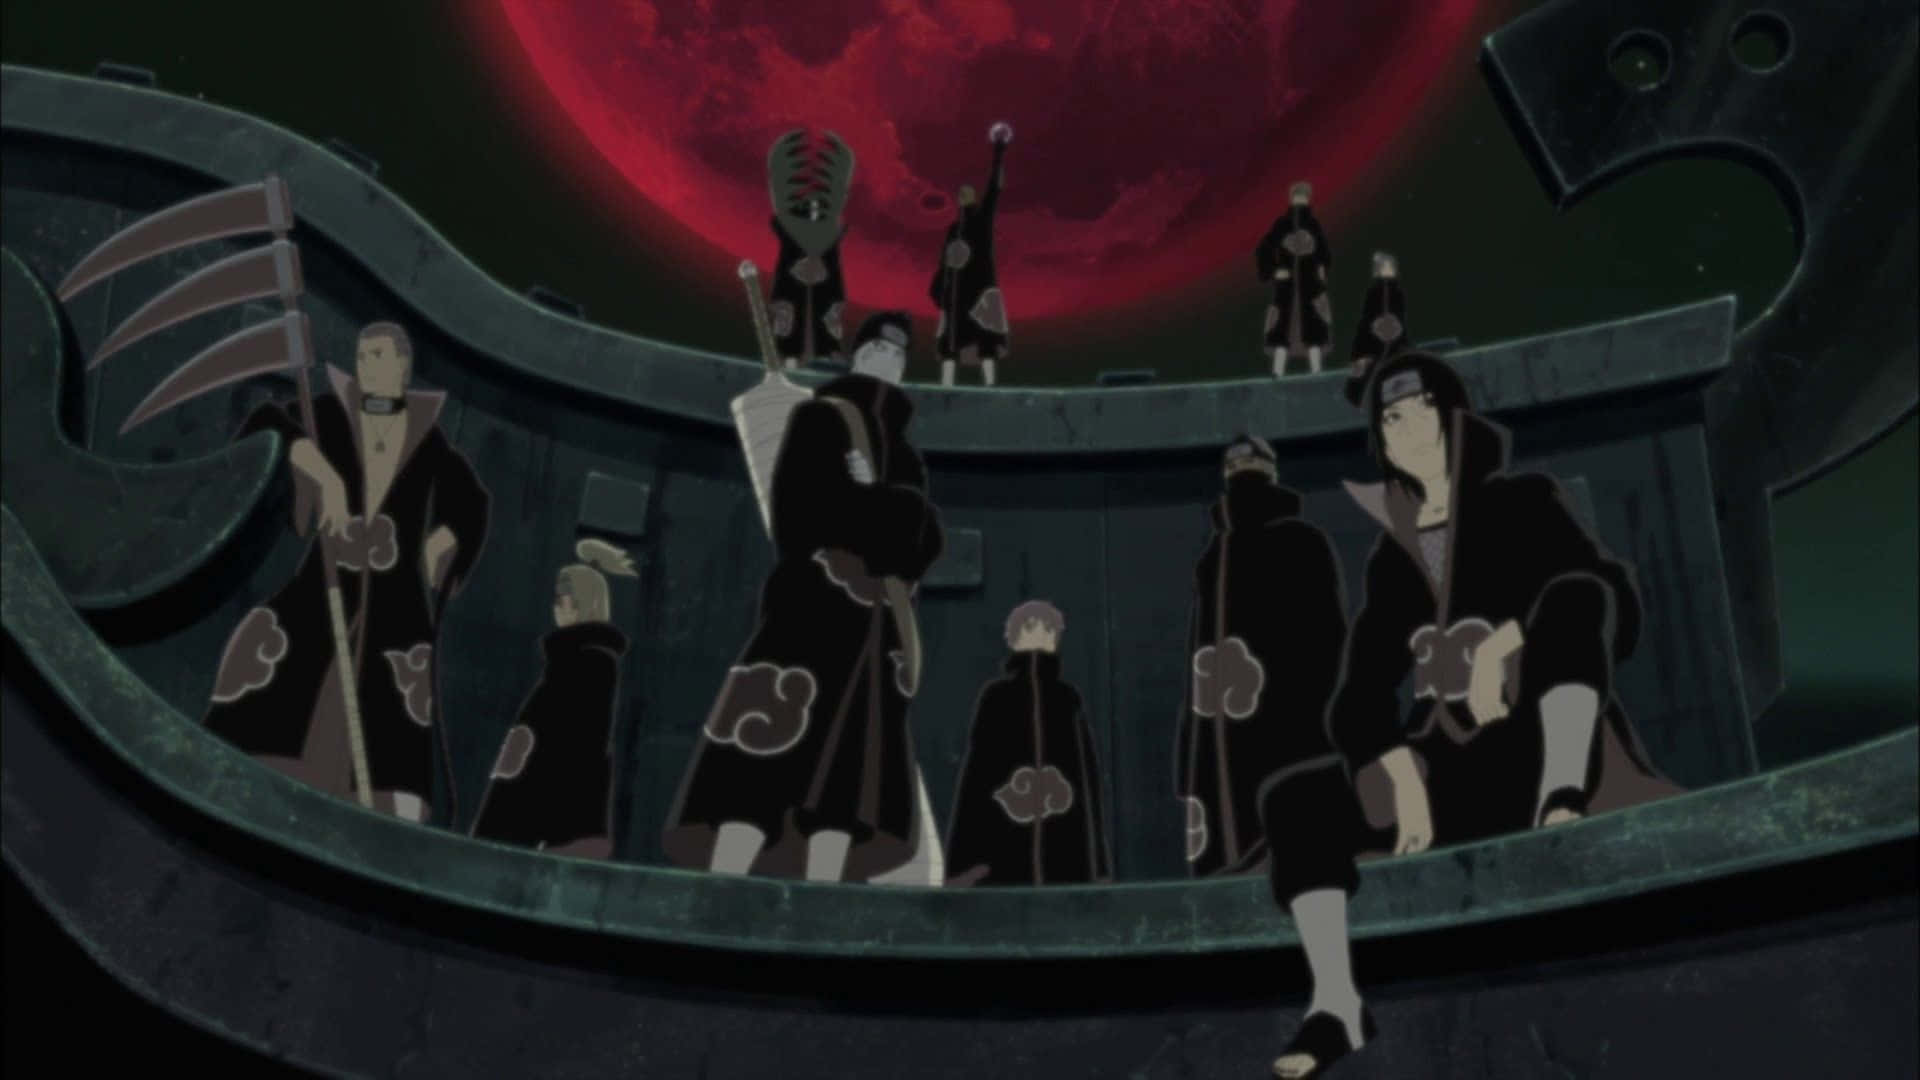 Itachi Aesthetic Sitting Down With Akatsuki Members Under Big Red Moon Wallpaper